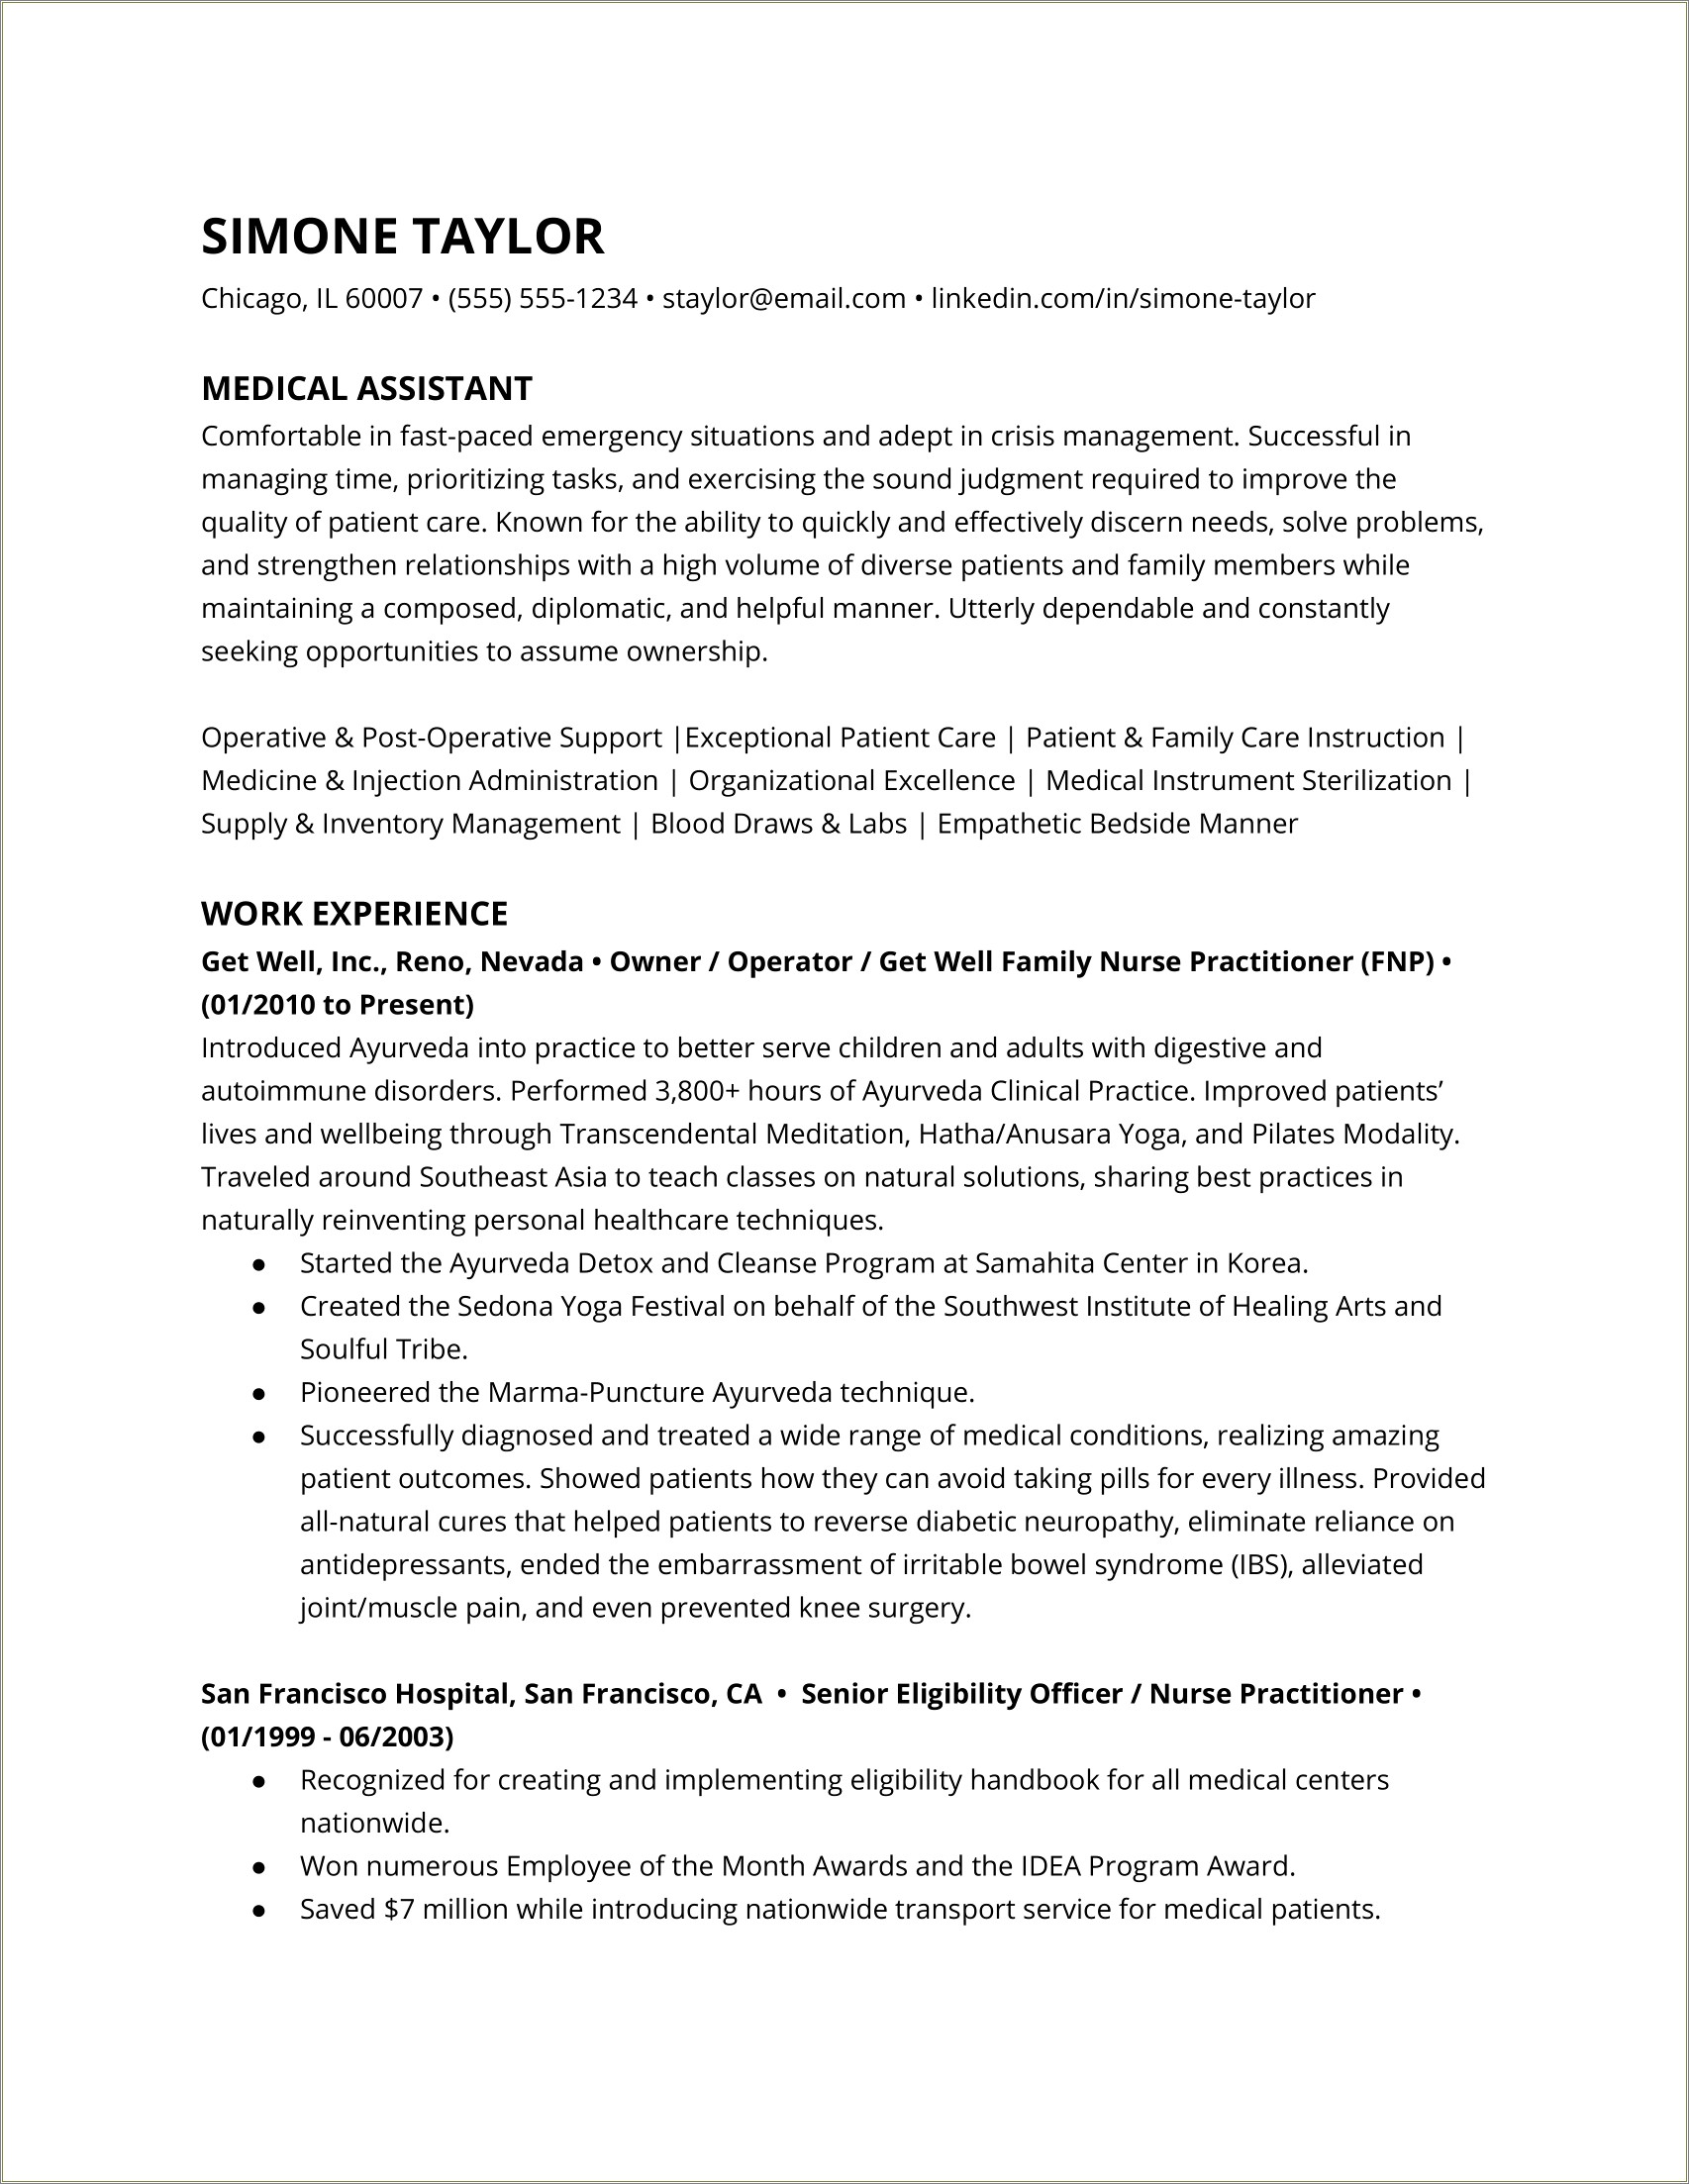 Resume Summary Examples Entry Level Cna